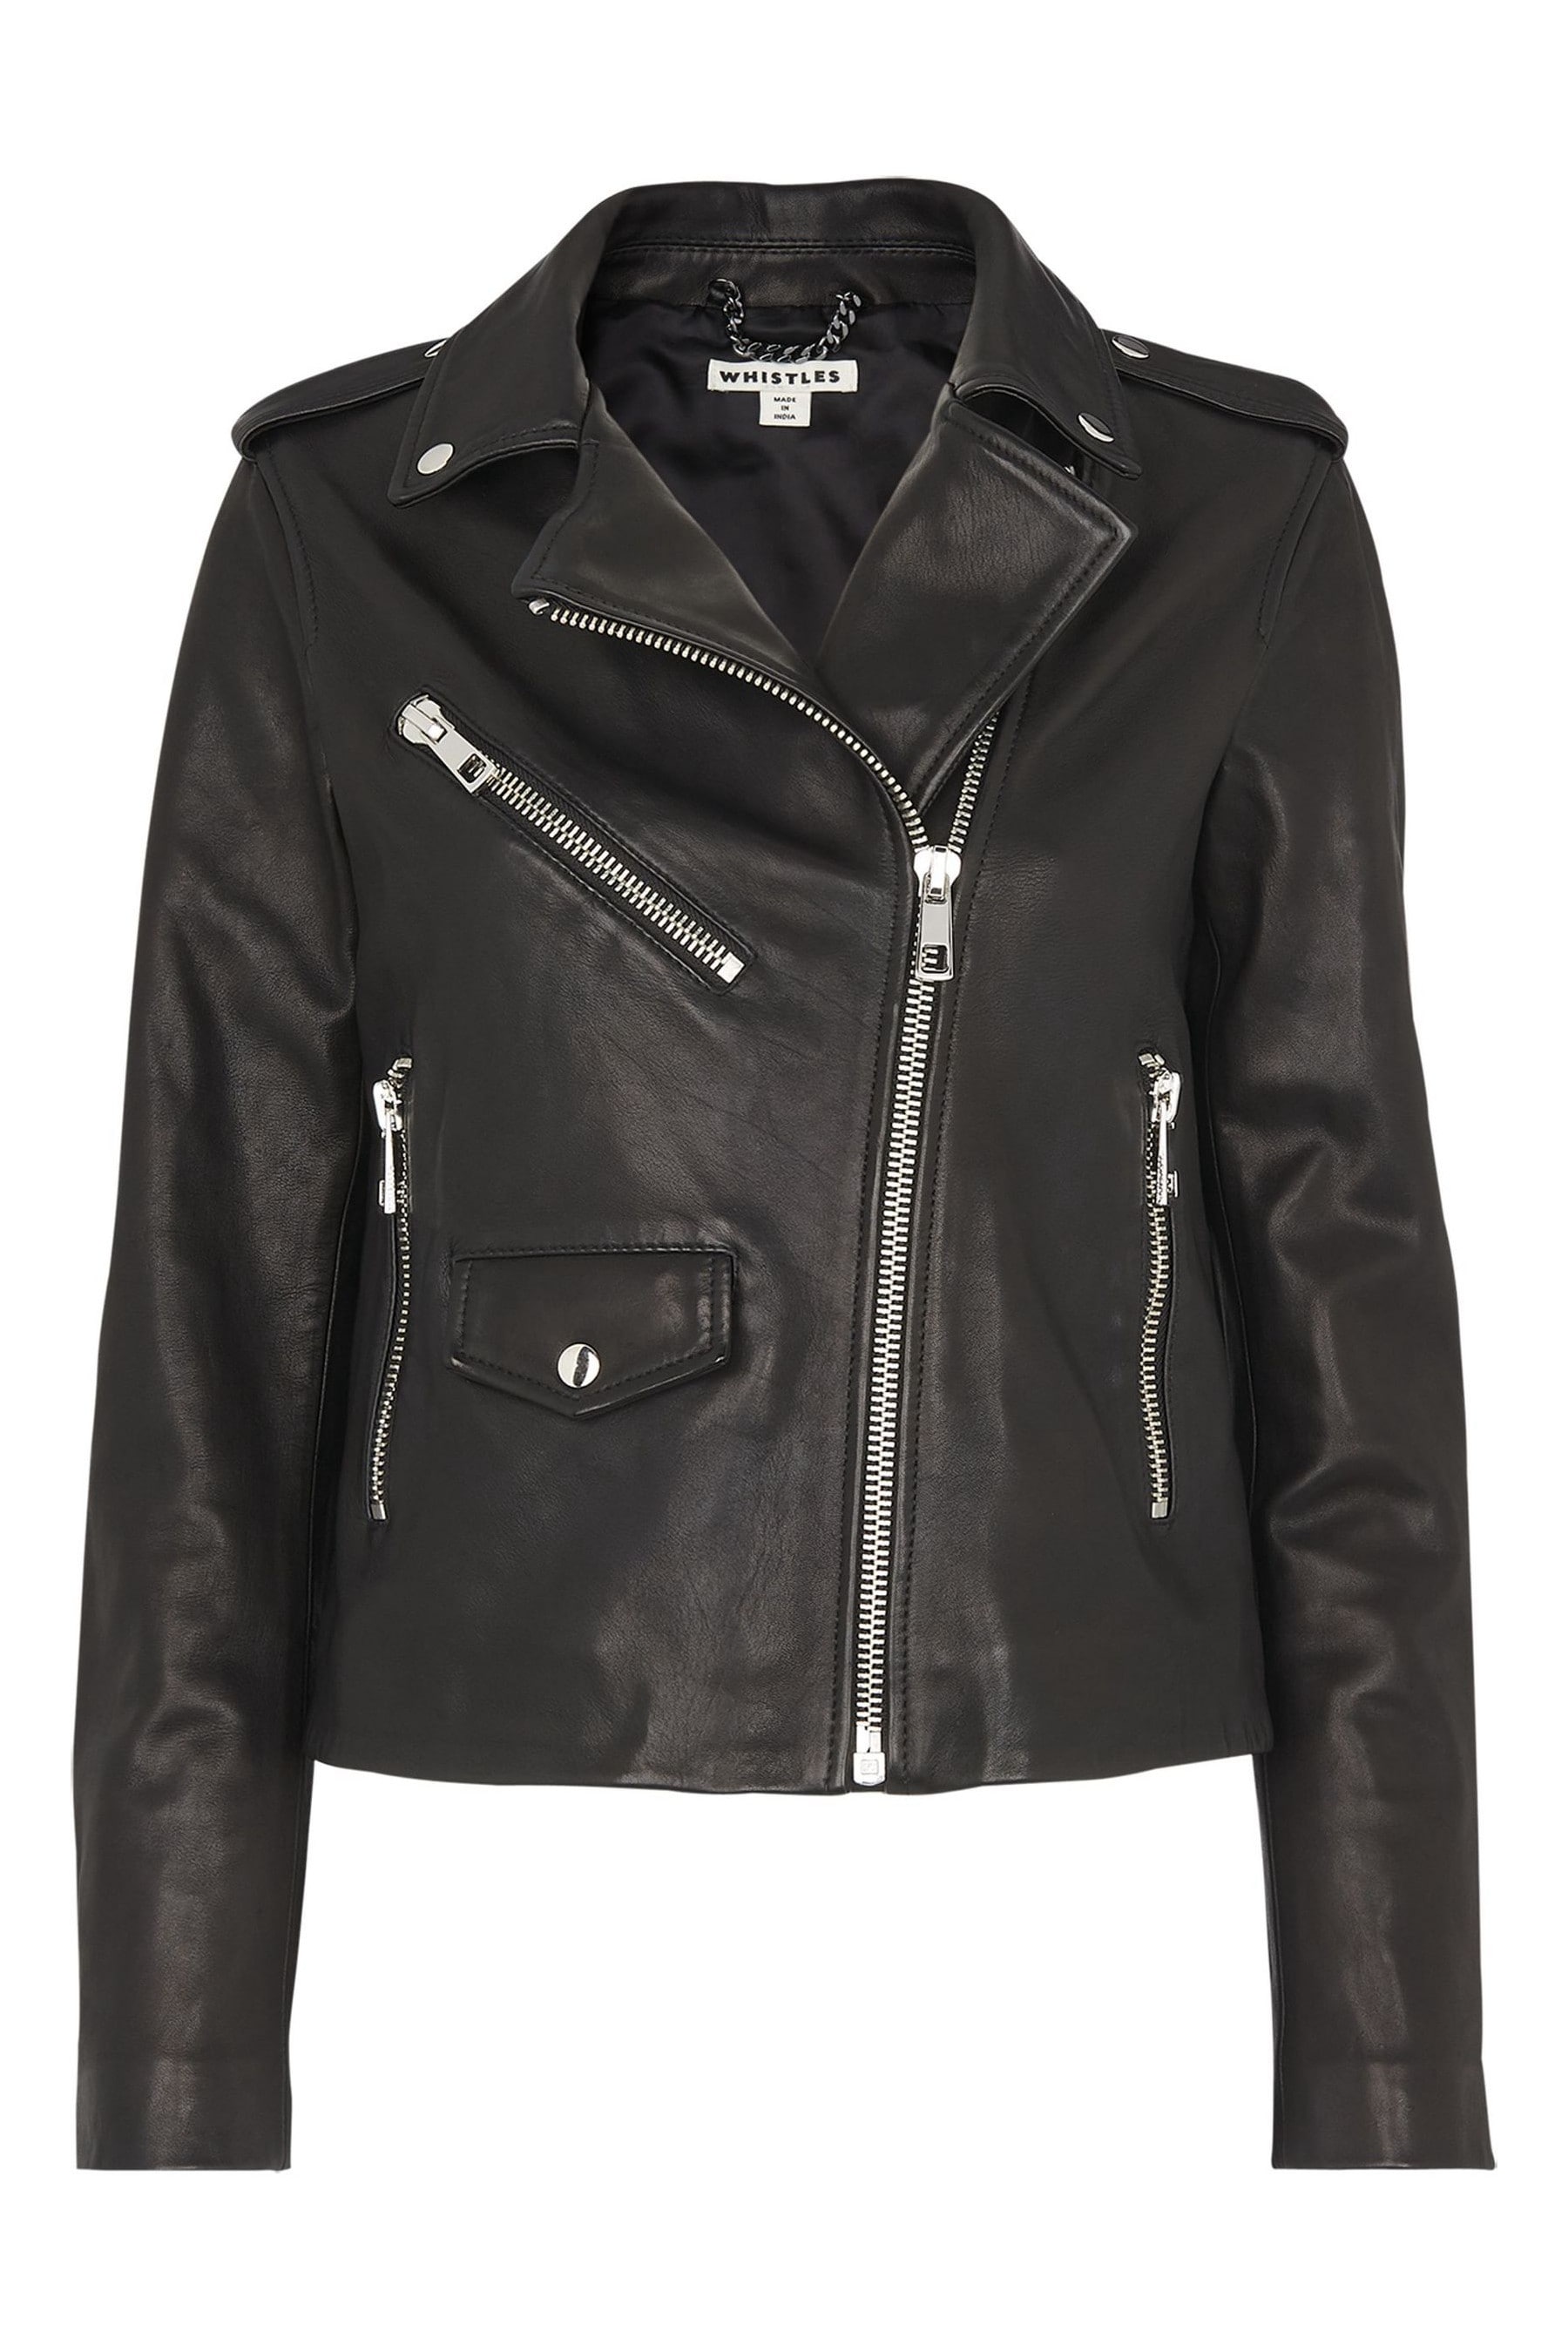 Buy Whistles Black Pocket Leather Jacket from the Next UK online shop